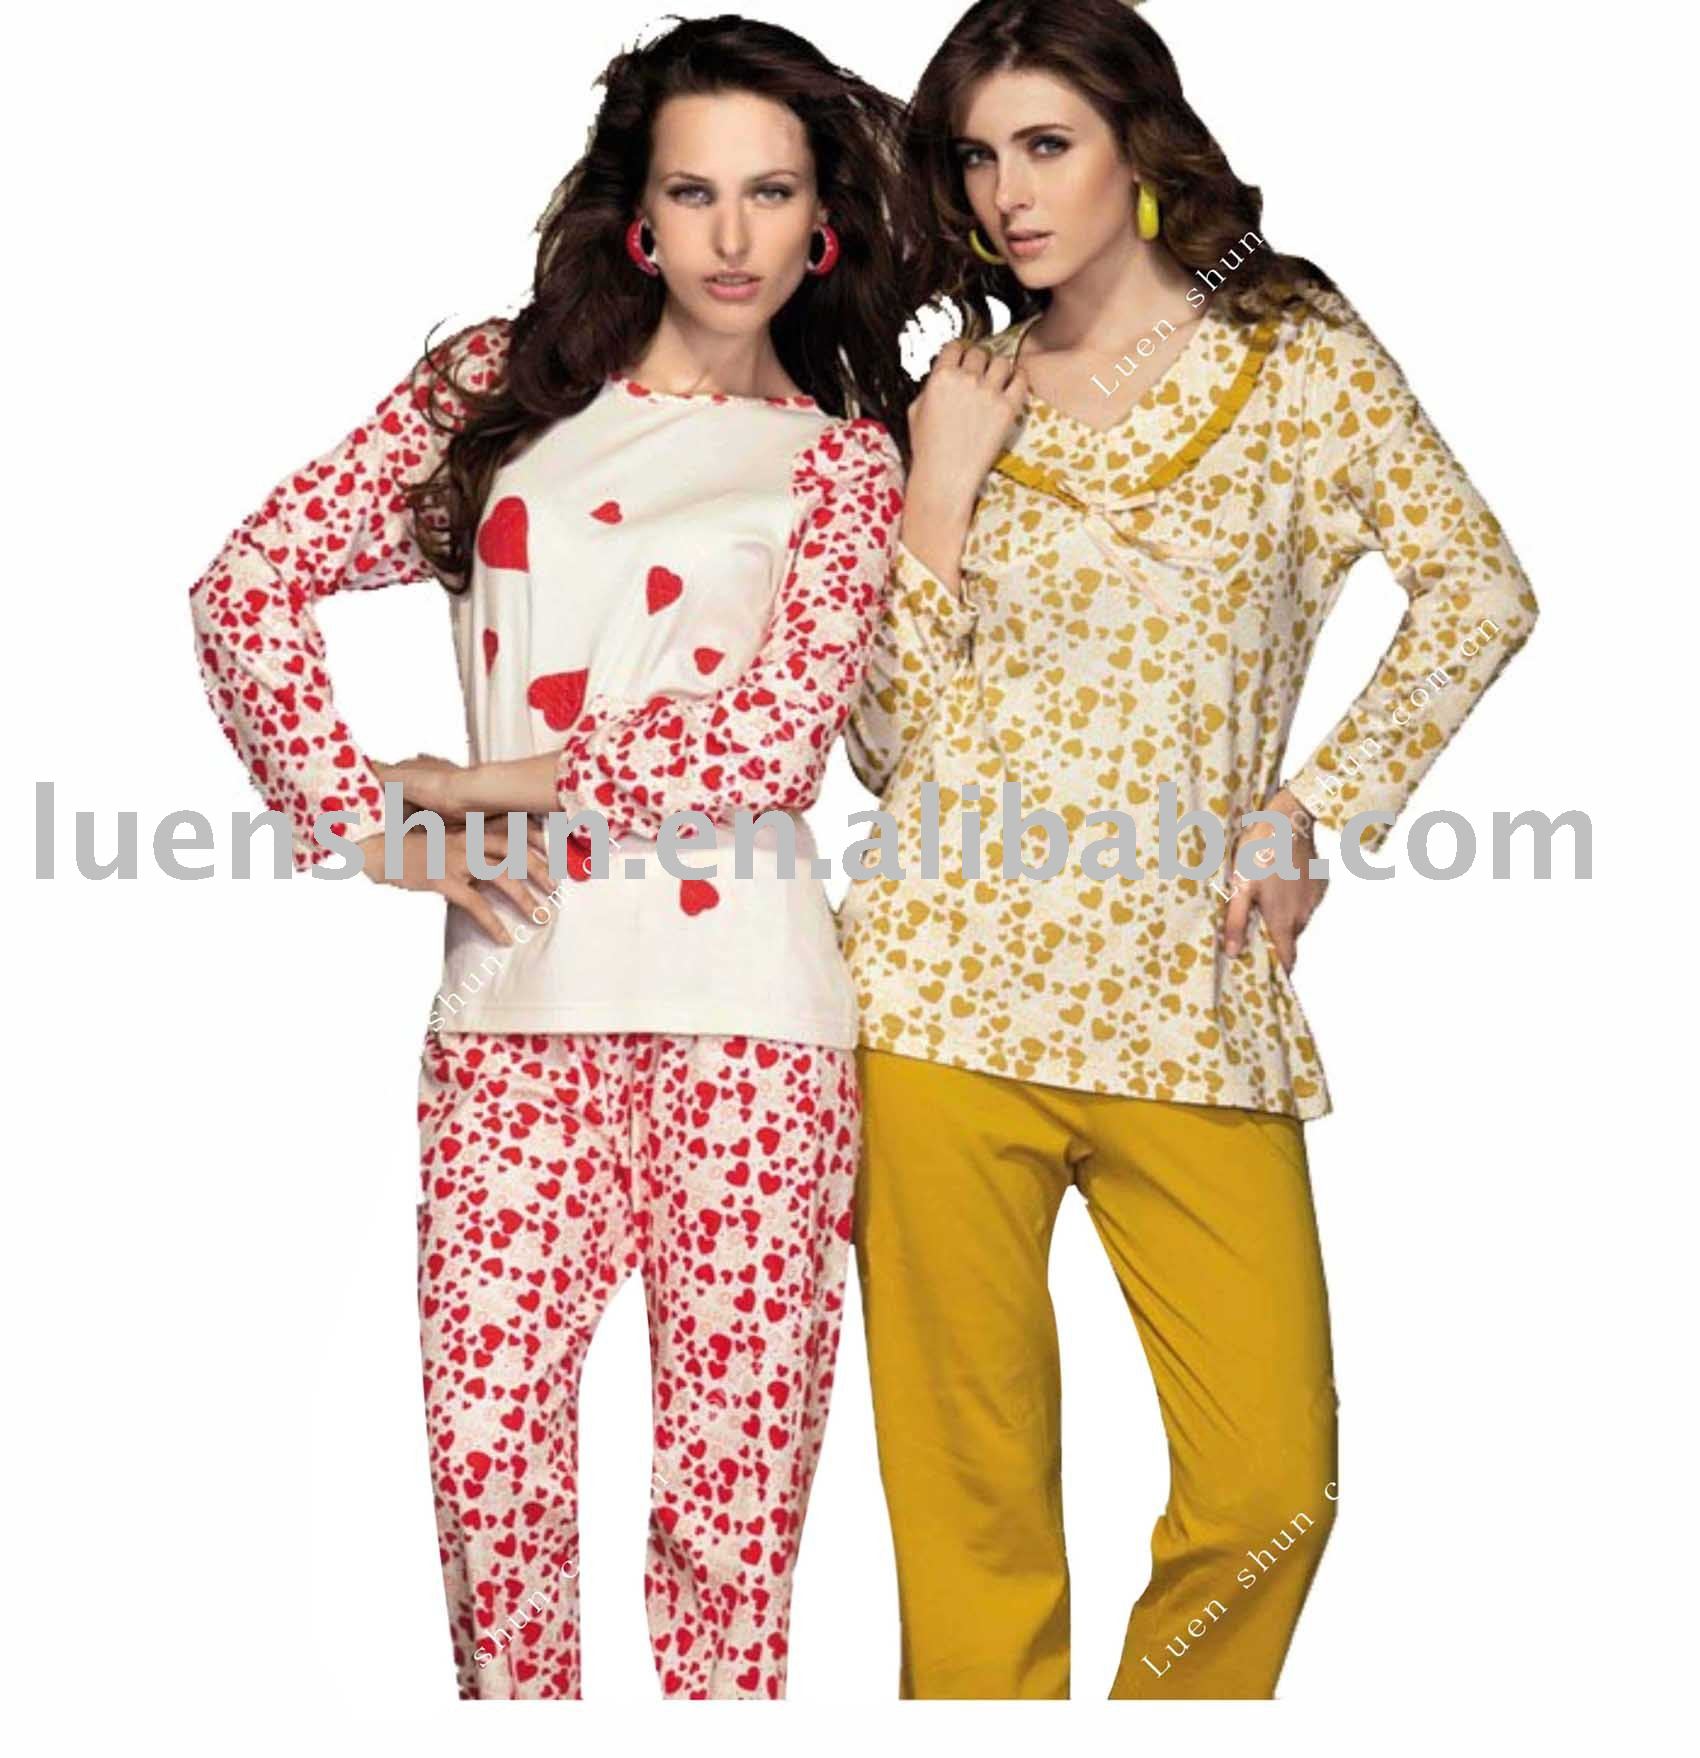 GSY_Cotton_Women_s_Pajamas_in_Winter.jpg